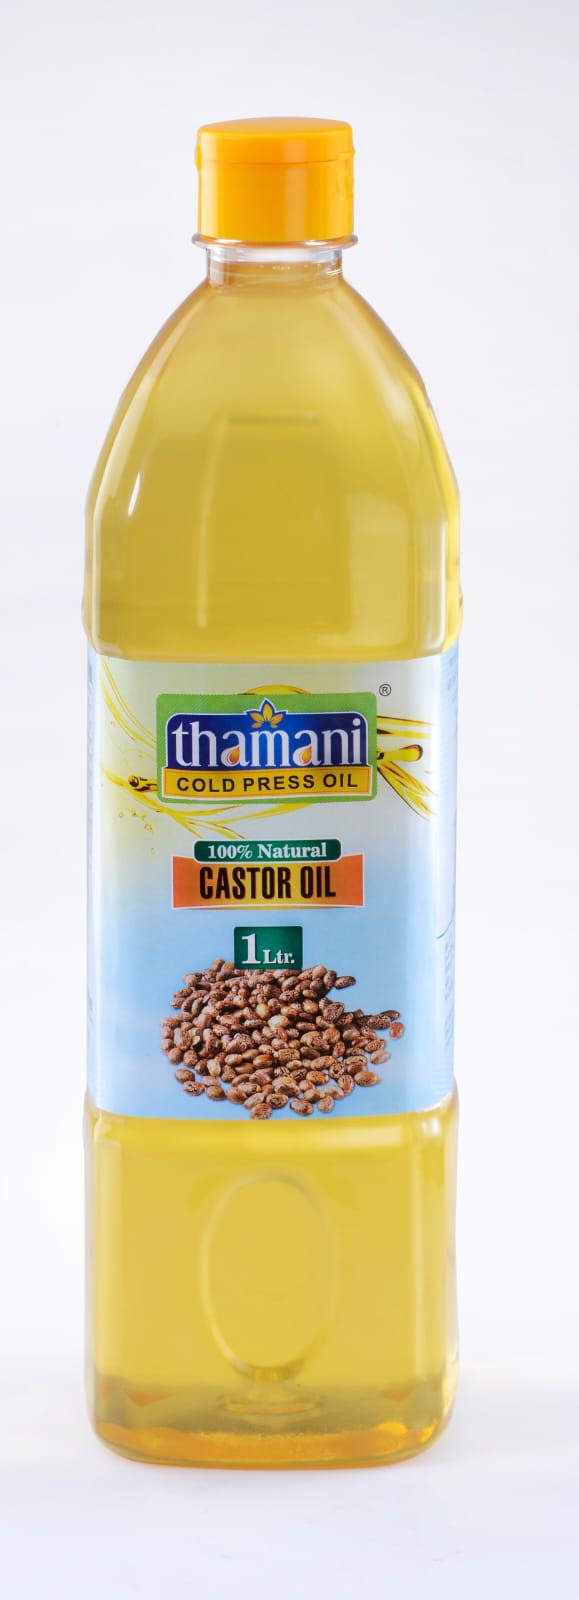 Thamani Castor Oil